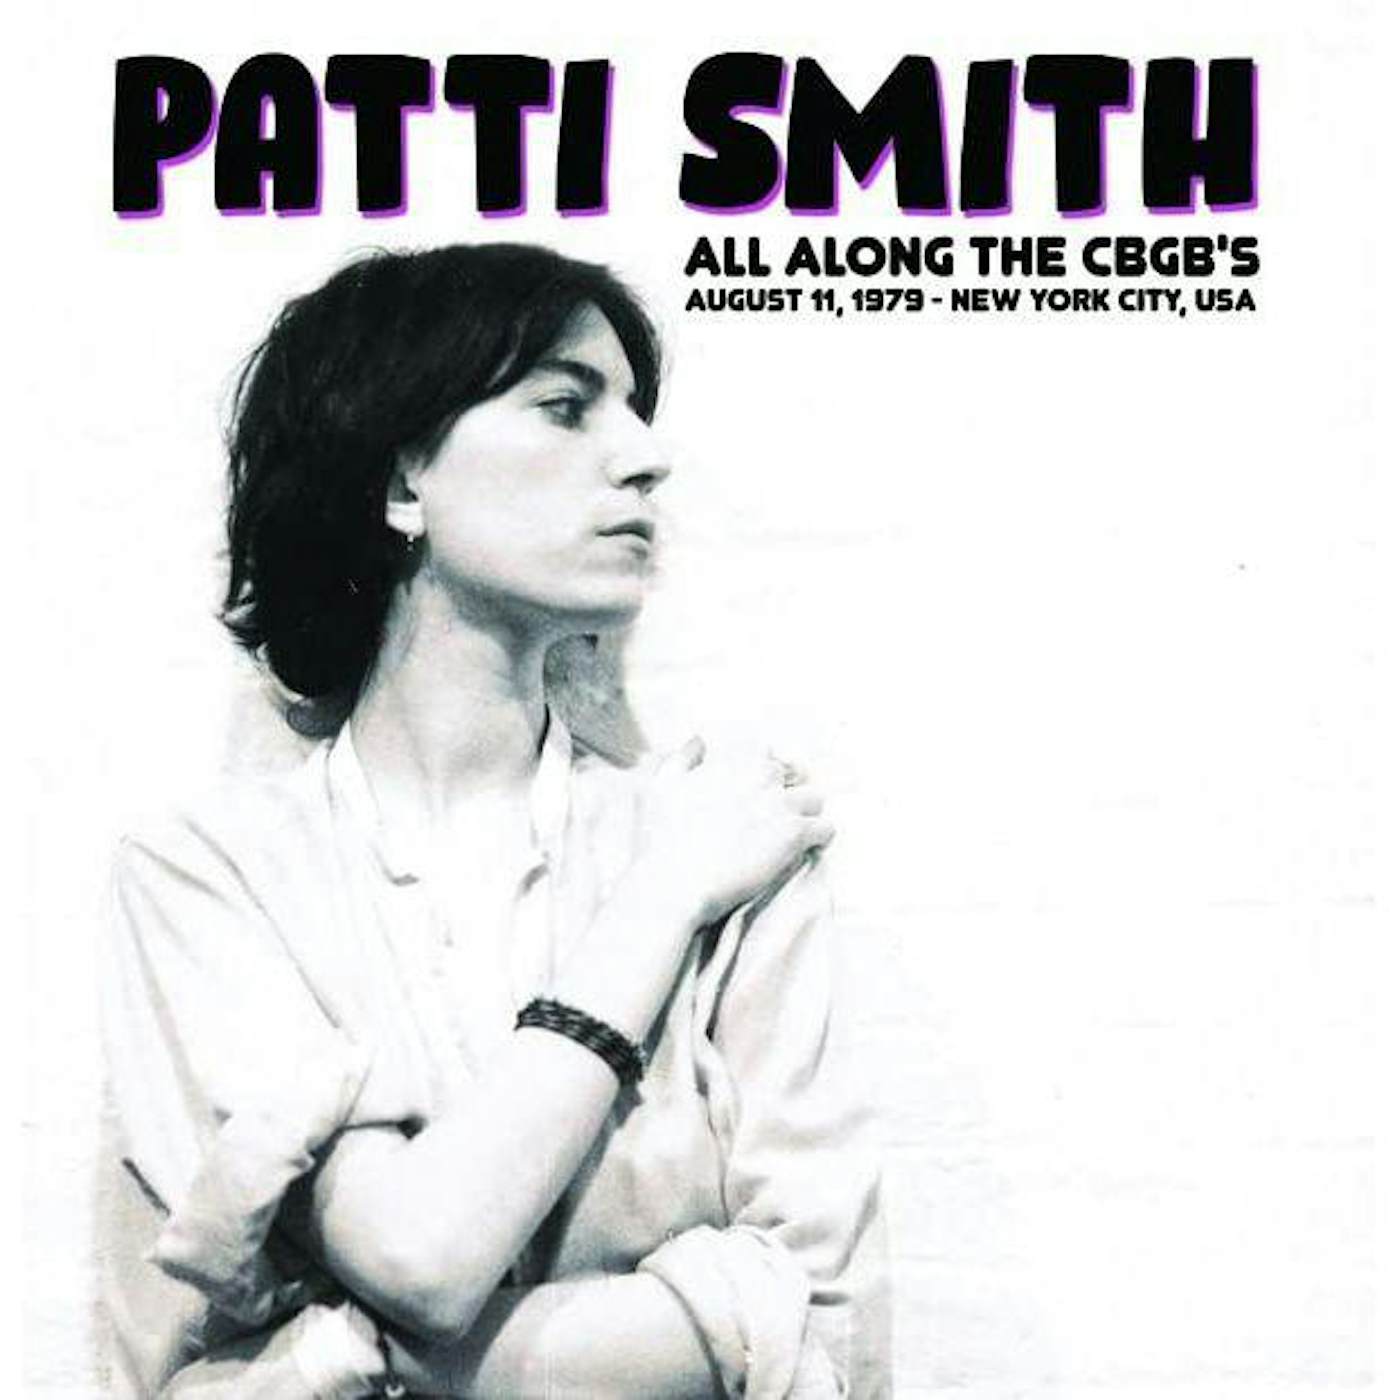 Patti Smith All Along The CBGB's: August 11, 1979 - New York City, USA Vinyl Record